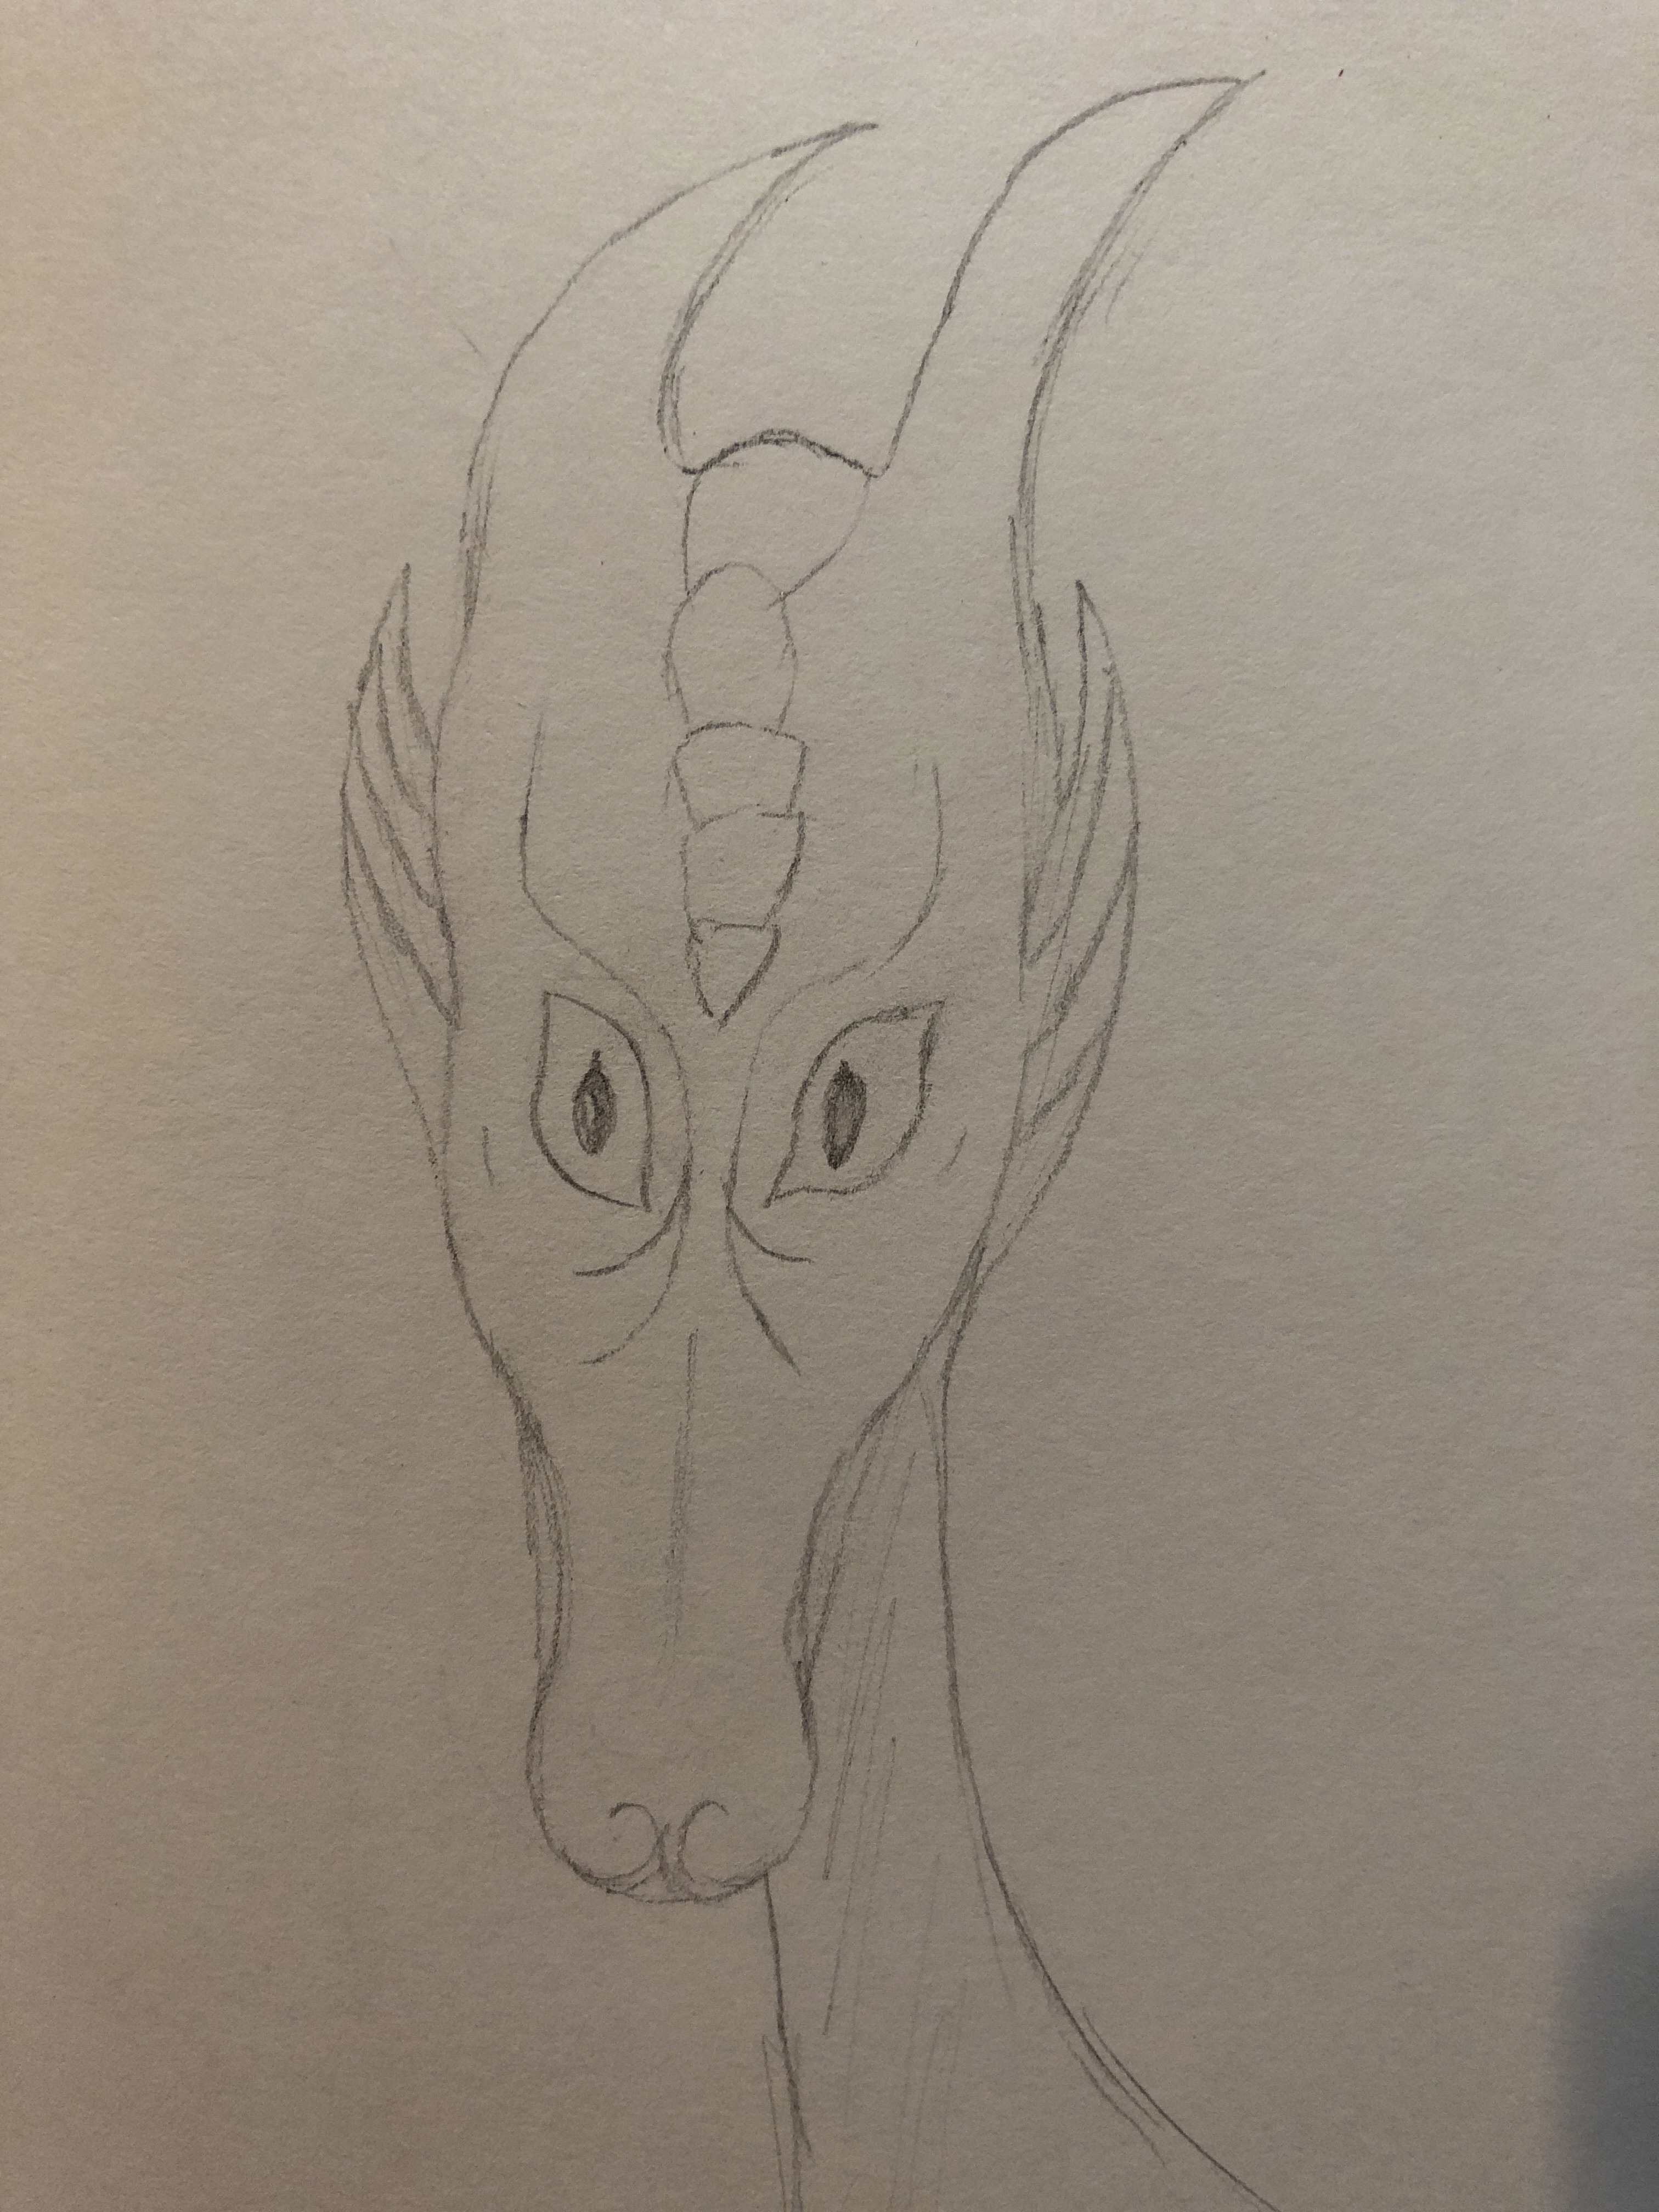 Dragon head in pencil slightly less grotesque